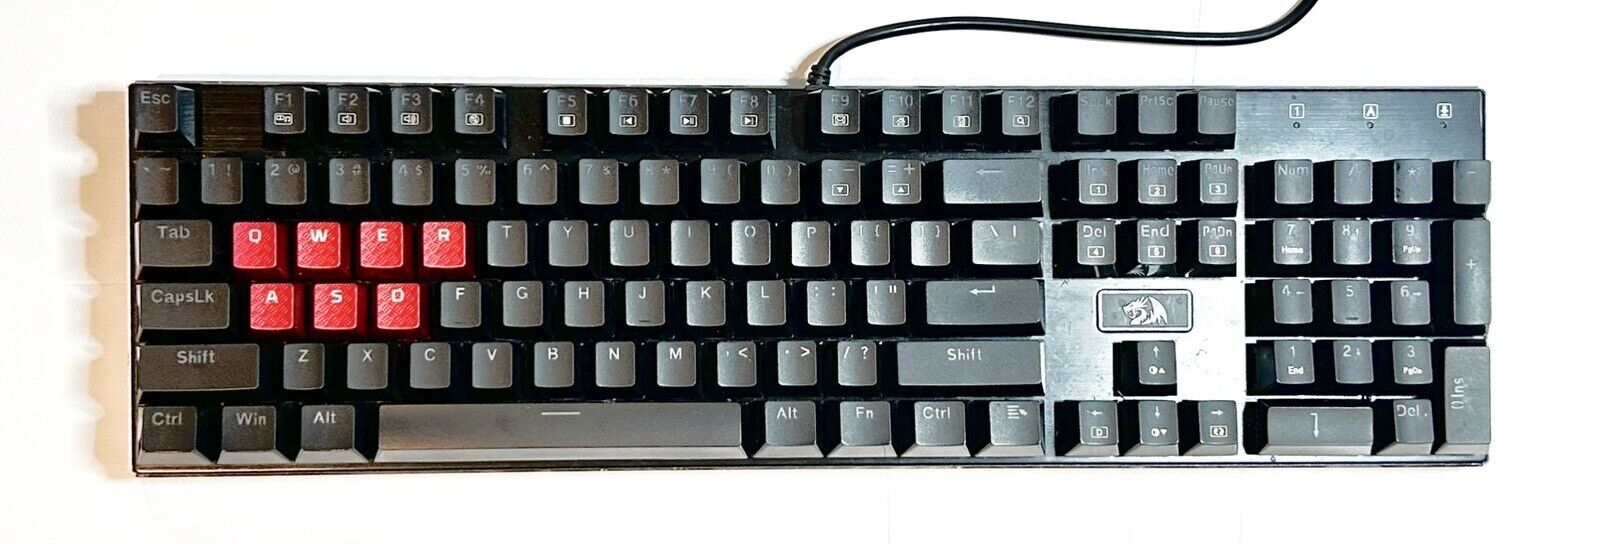 Redragon K556 RGB Mechanical Gaming Keyboard - Black/Comes with QWERASD keycaps